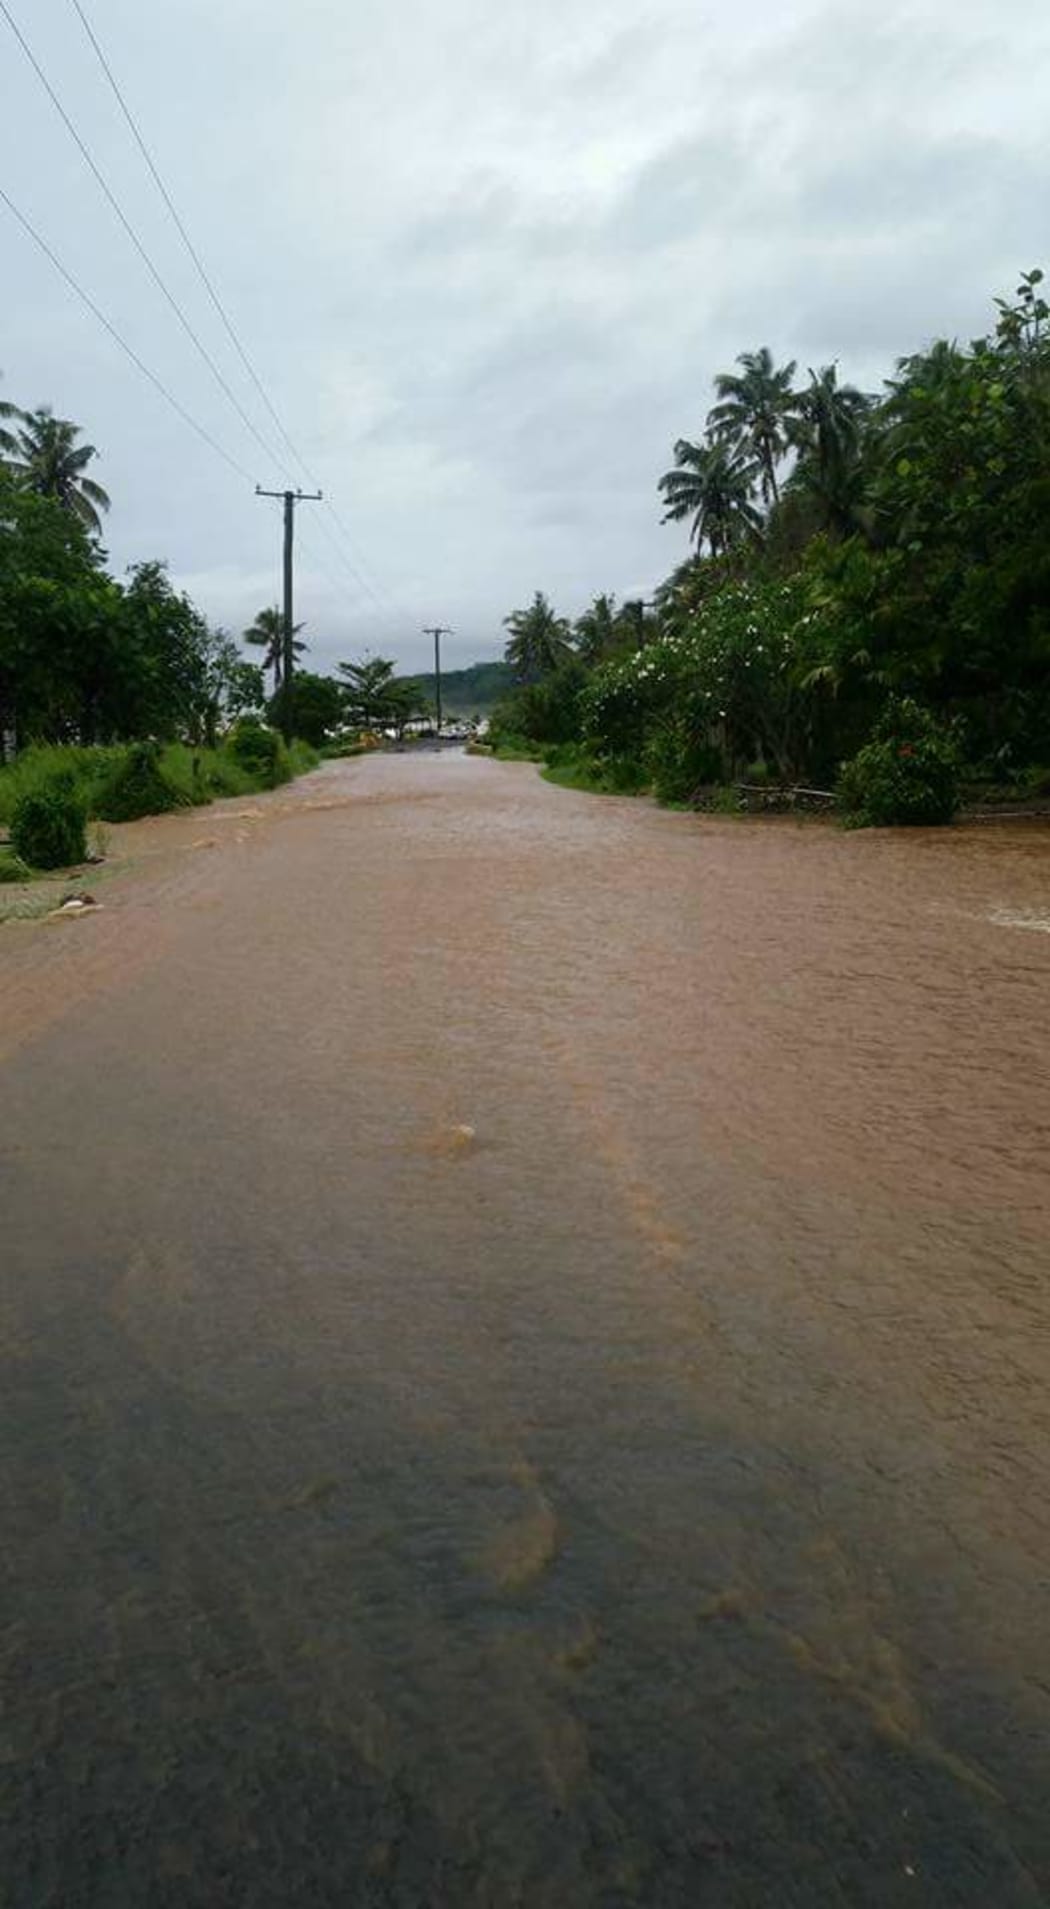 Heavy rain in Samoa has caused flooding